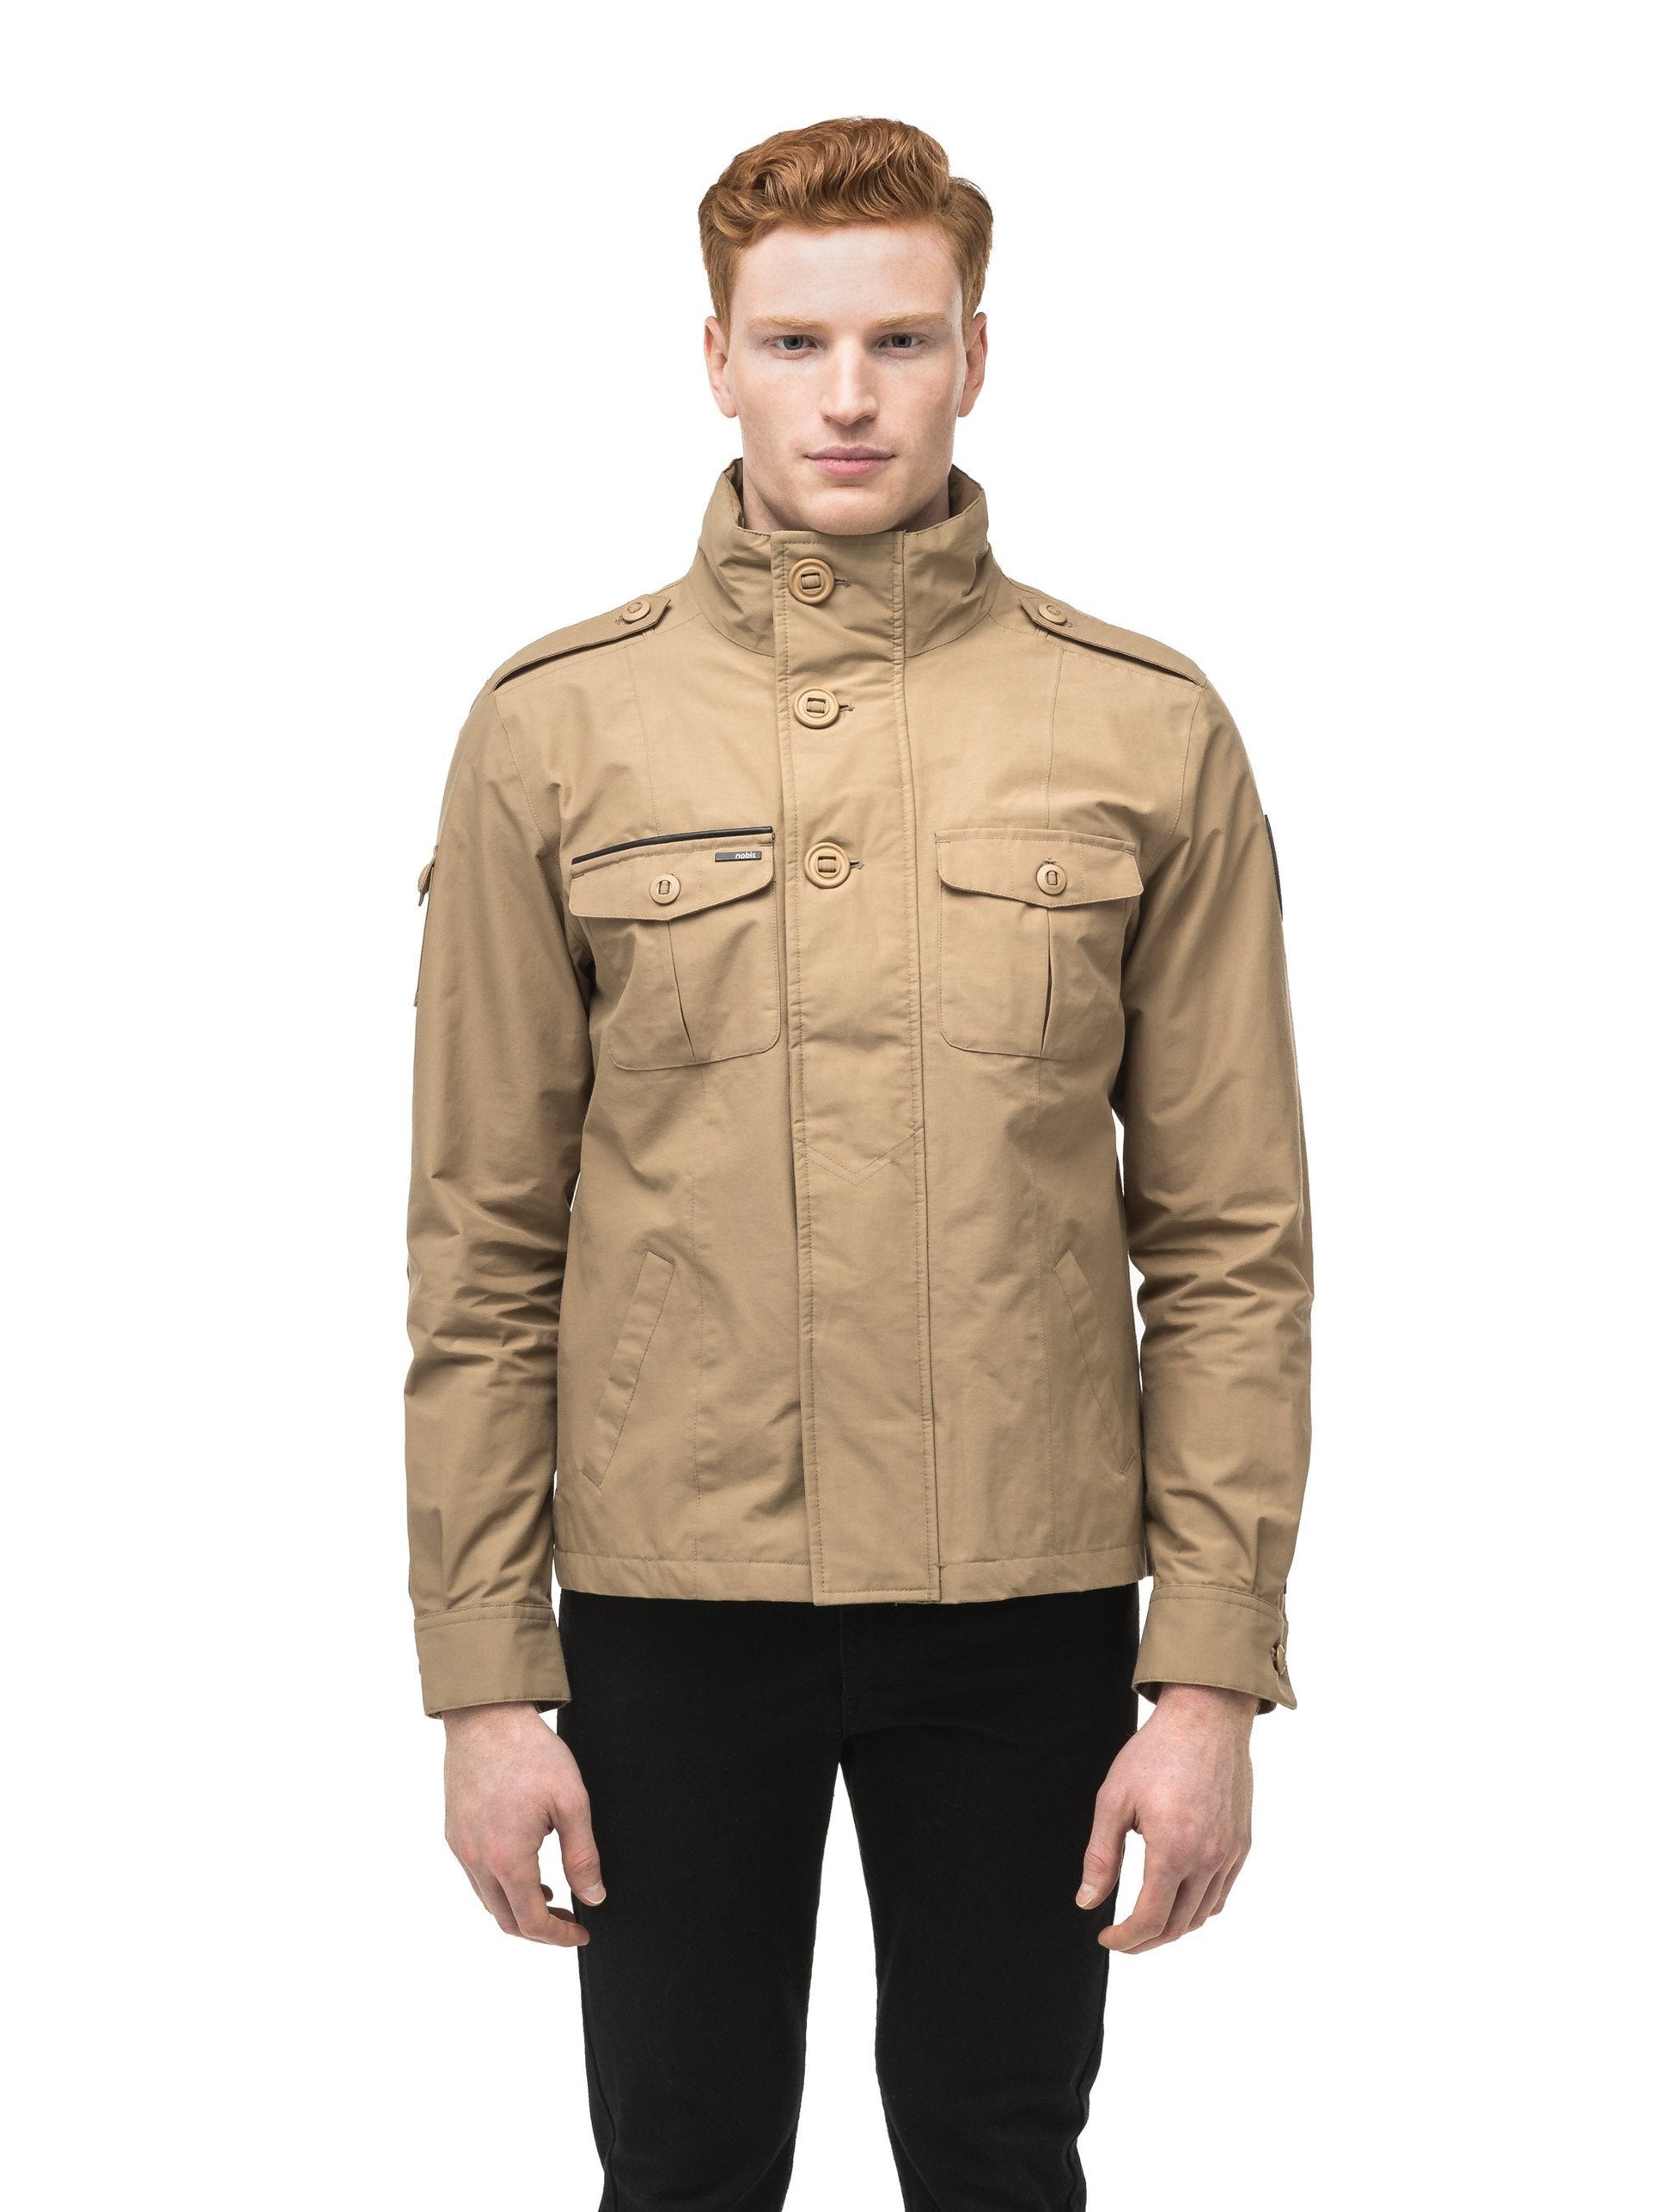 Men's waist length military style jacket in Cork